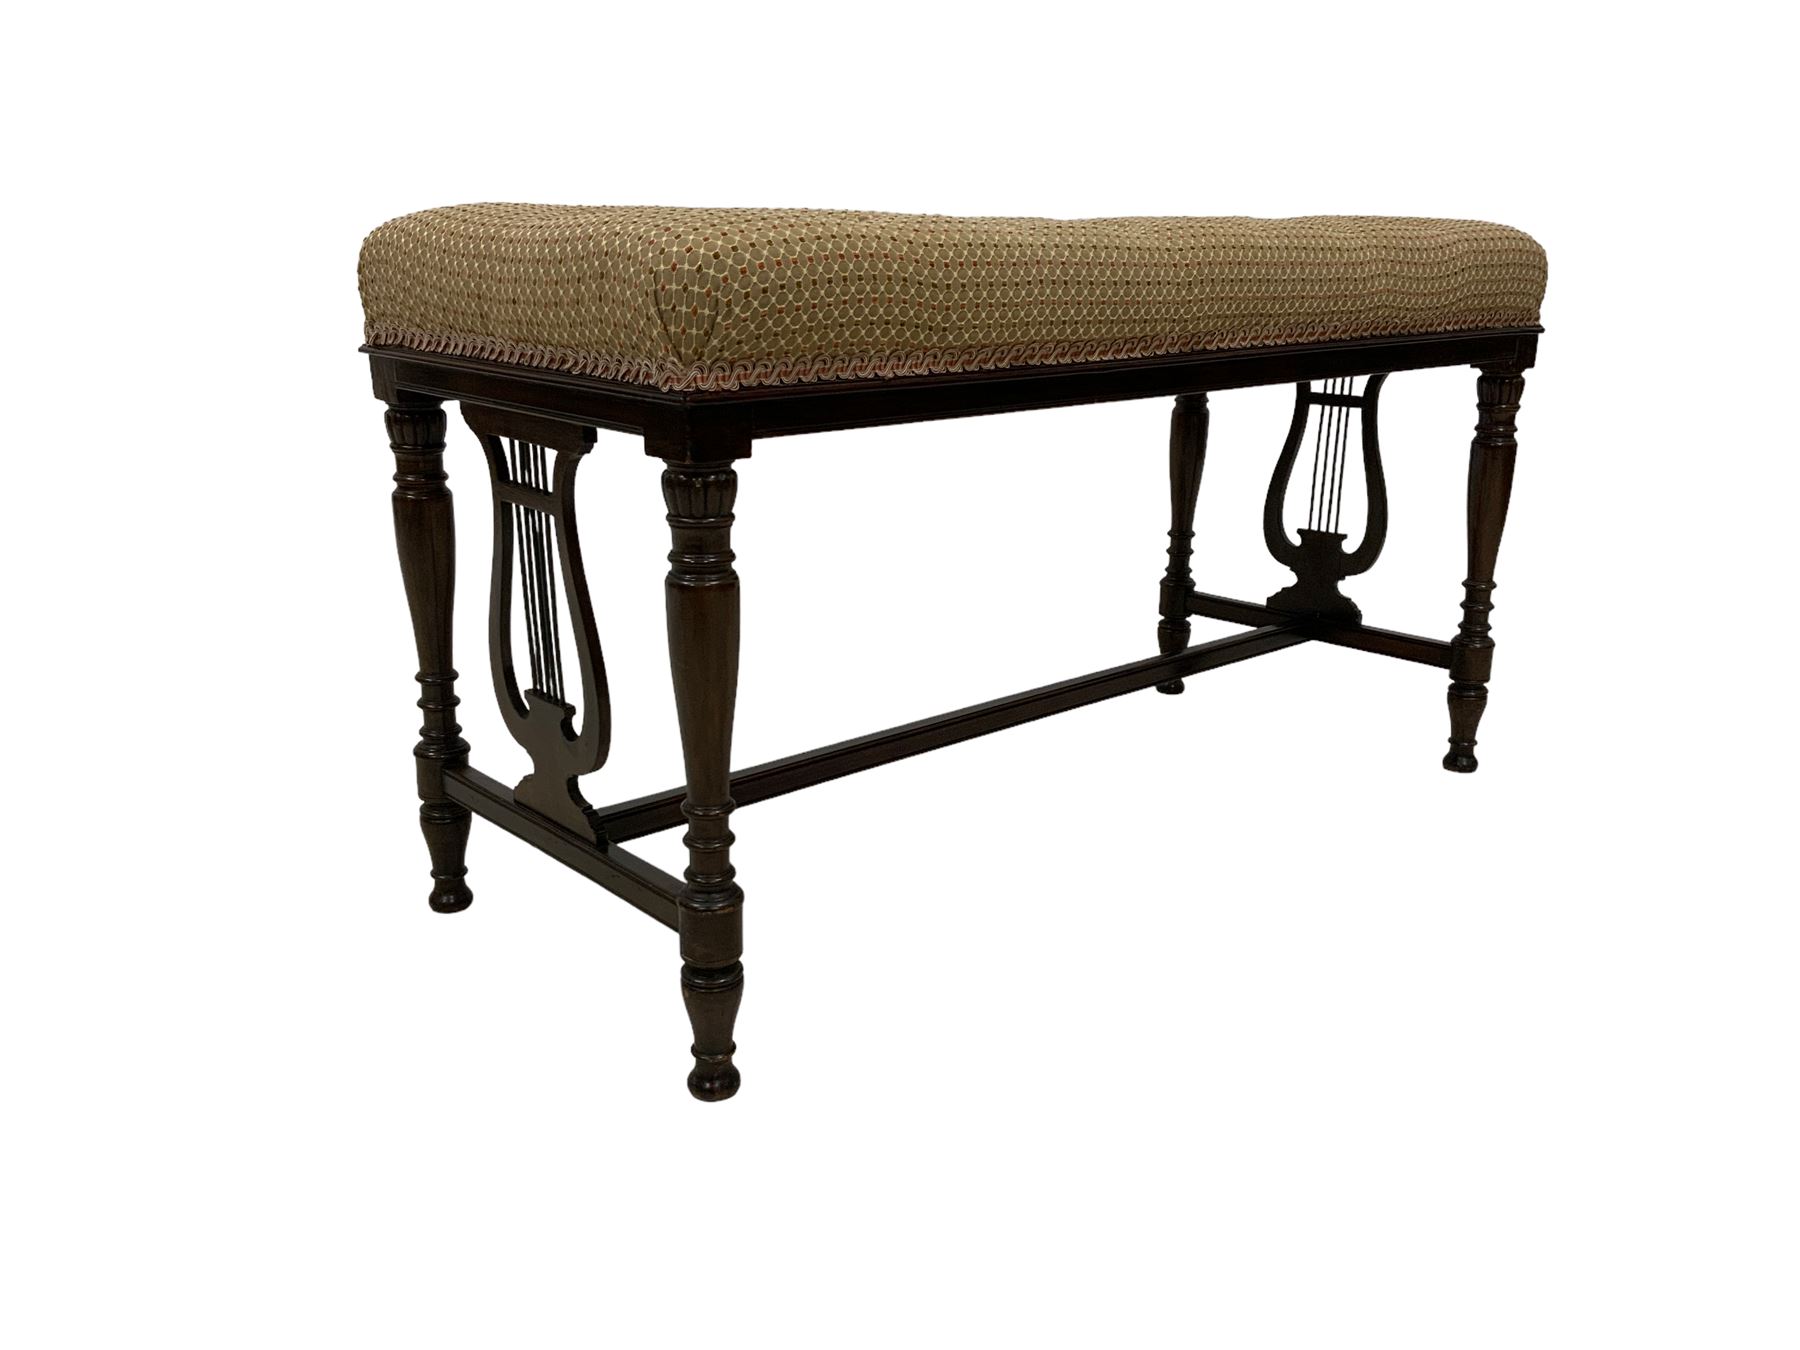 Regency design walnut piano duet stool - Image 2 of 8